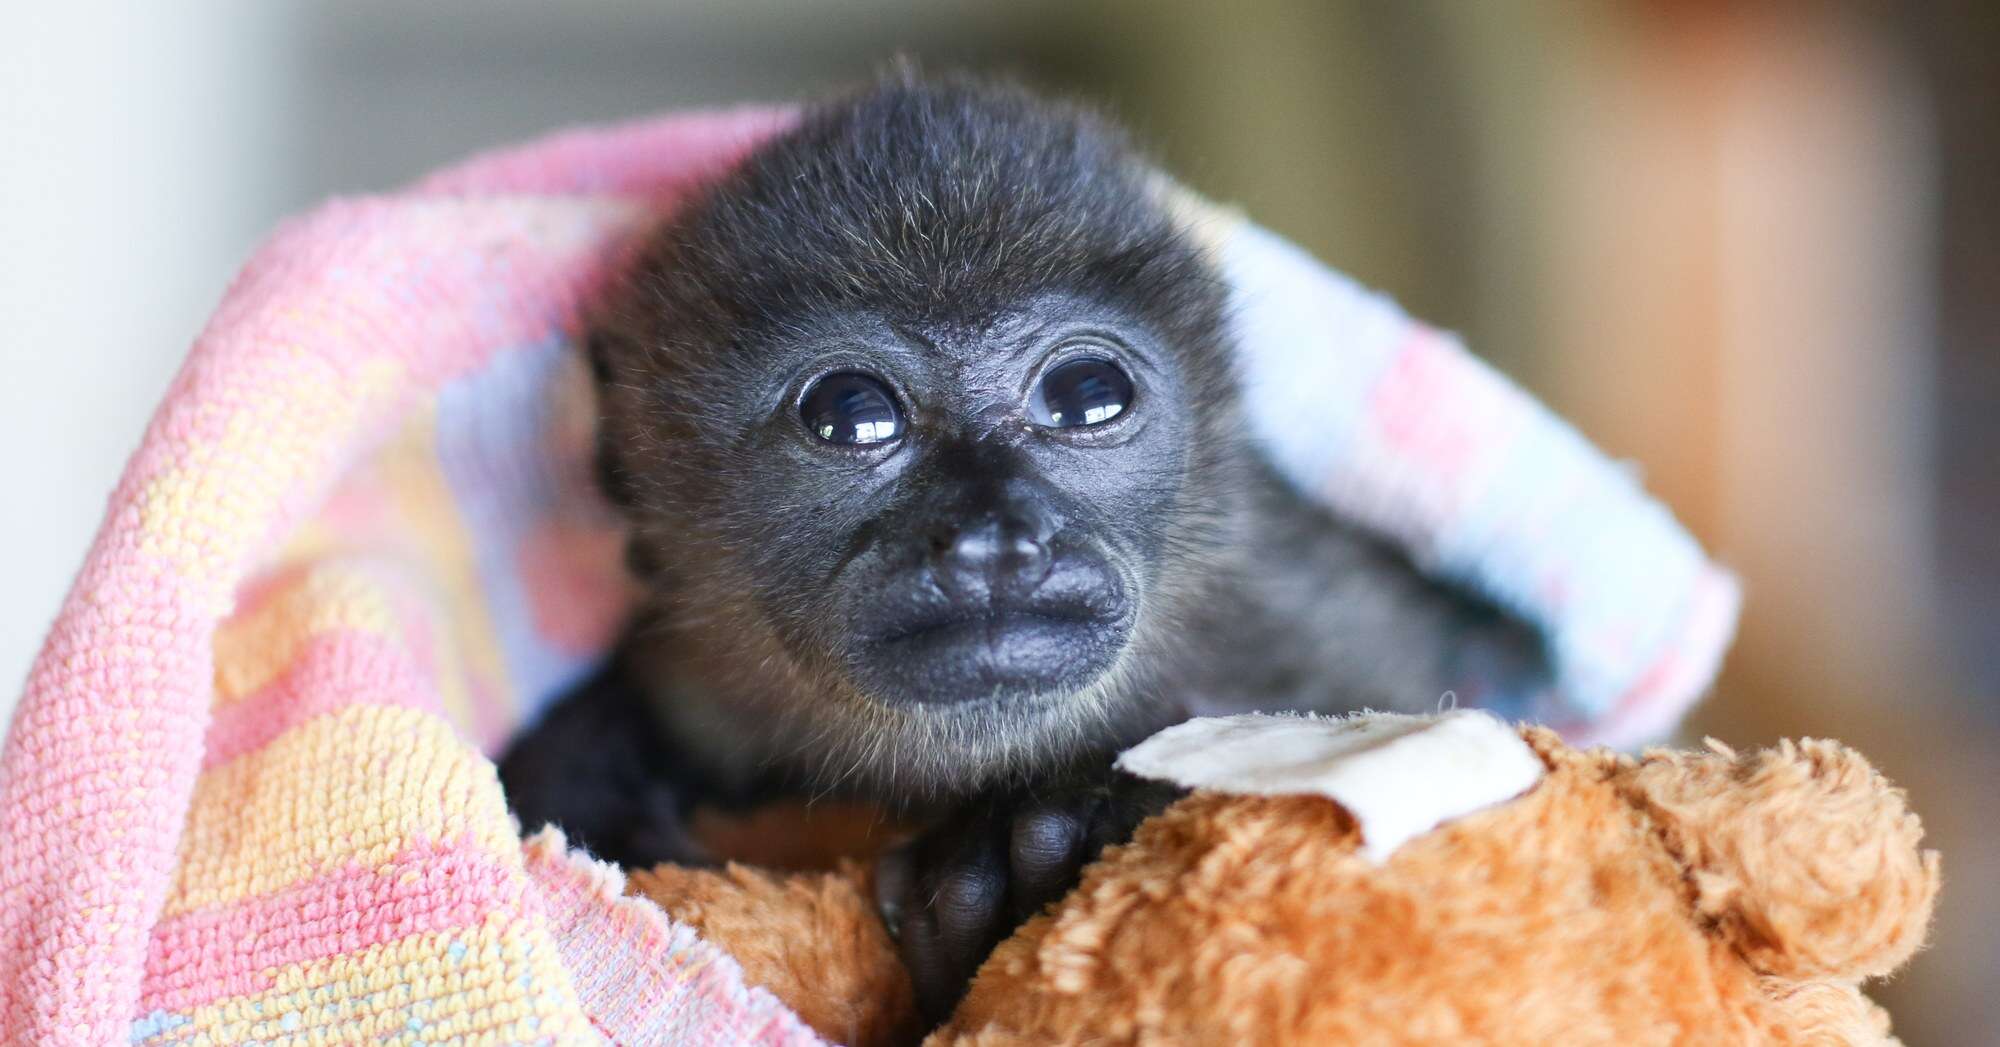 Rescued orphaned howler monkey gets teddy bear